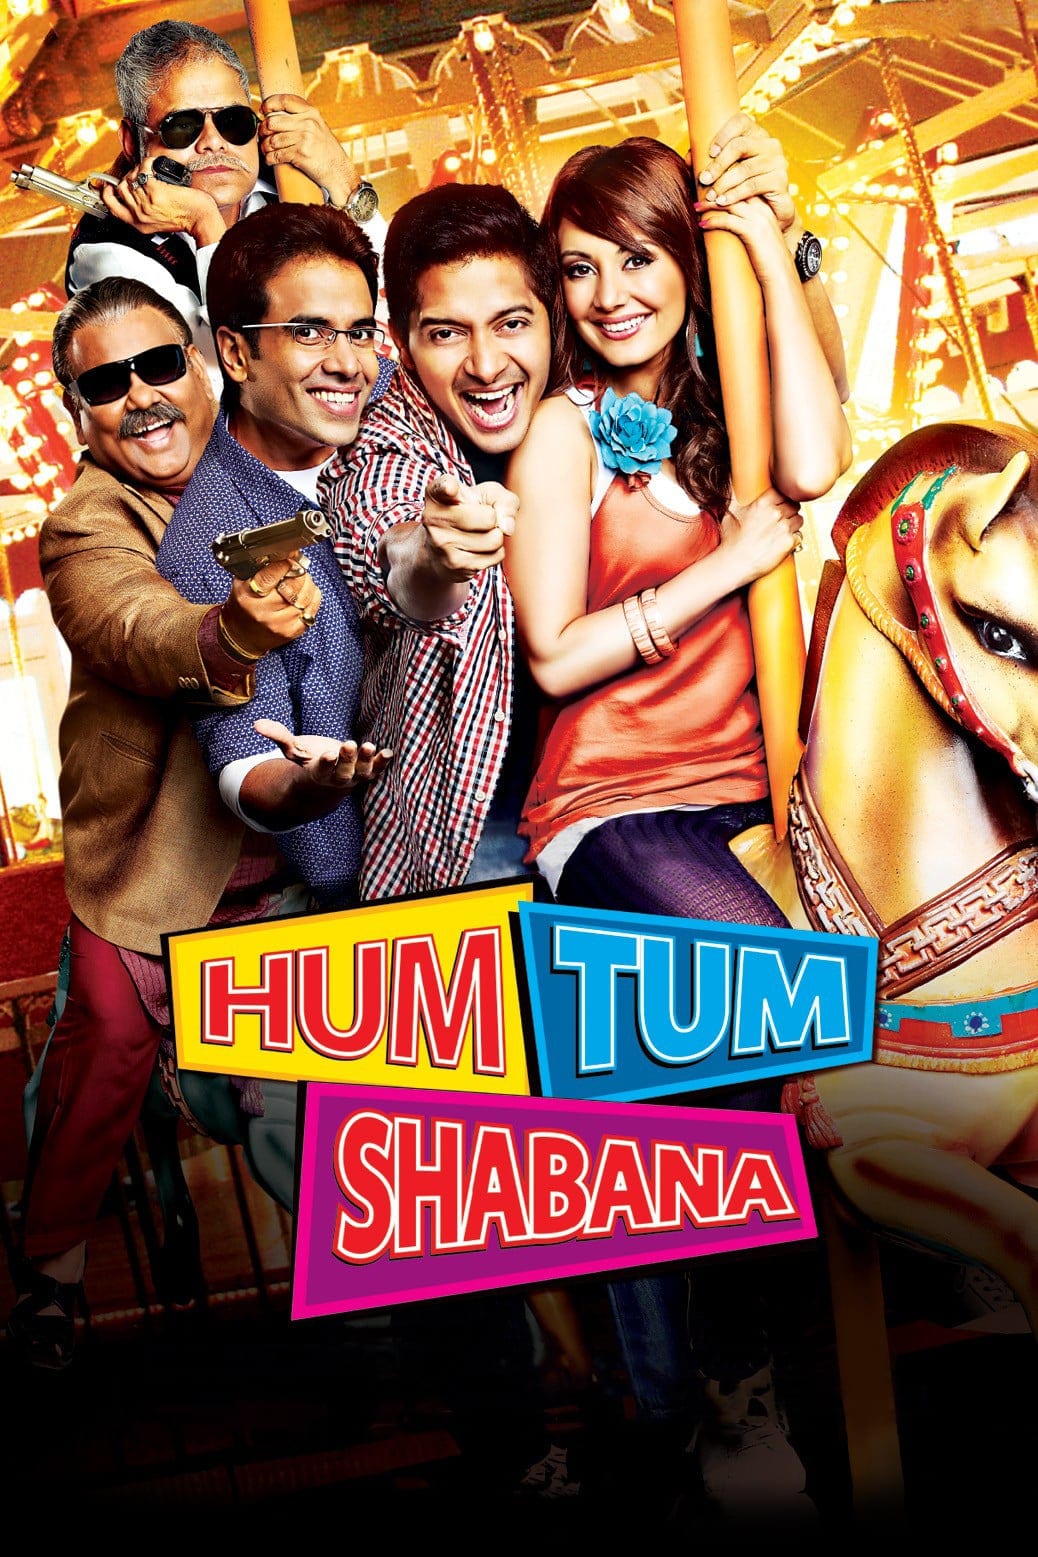 Poster for the movie "Hum Tum Shabana"